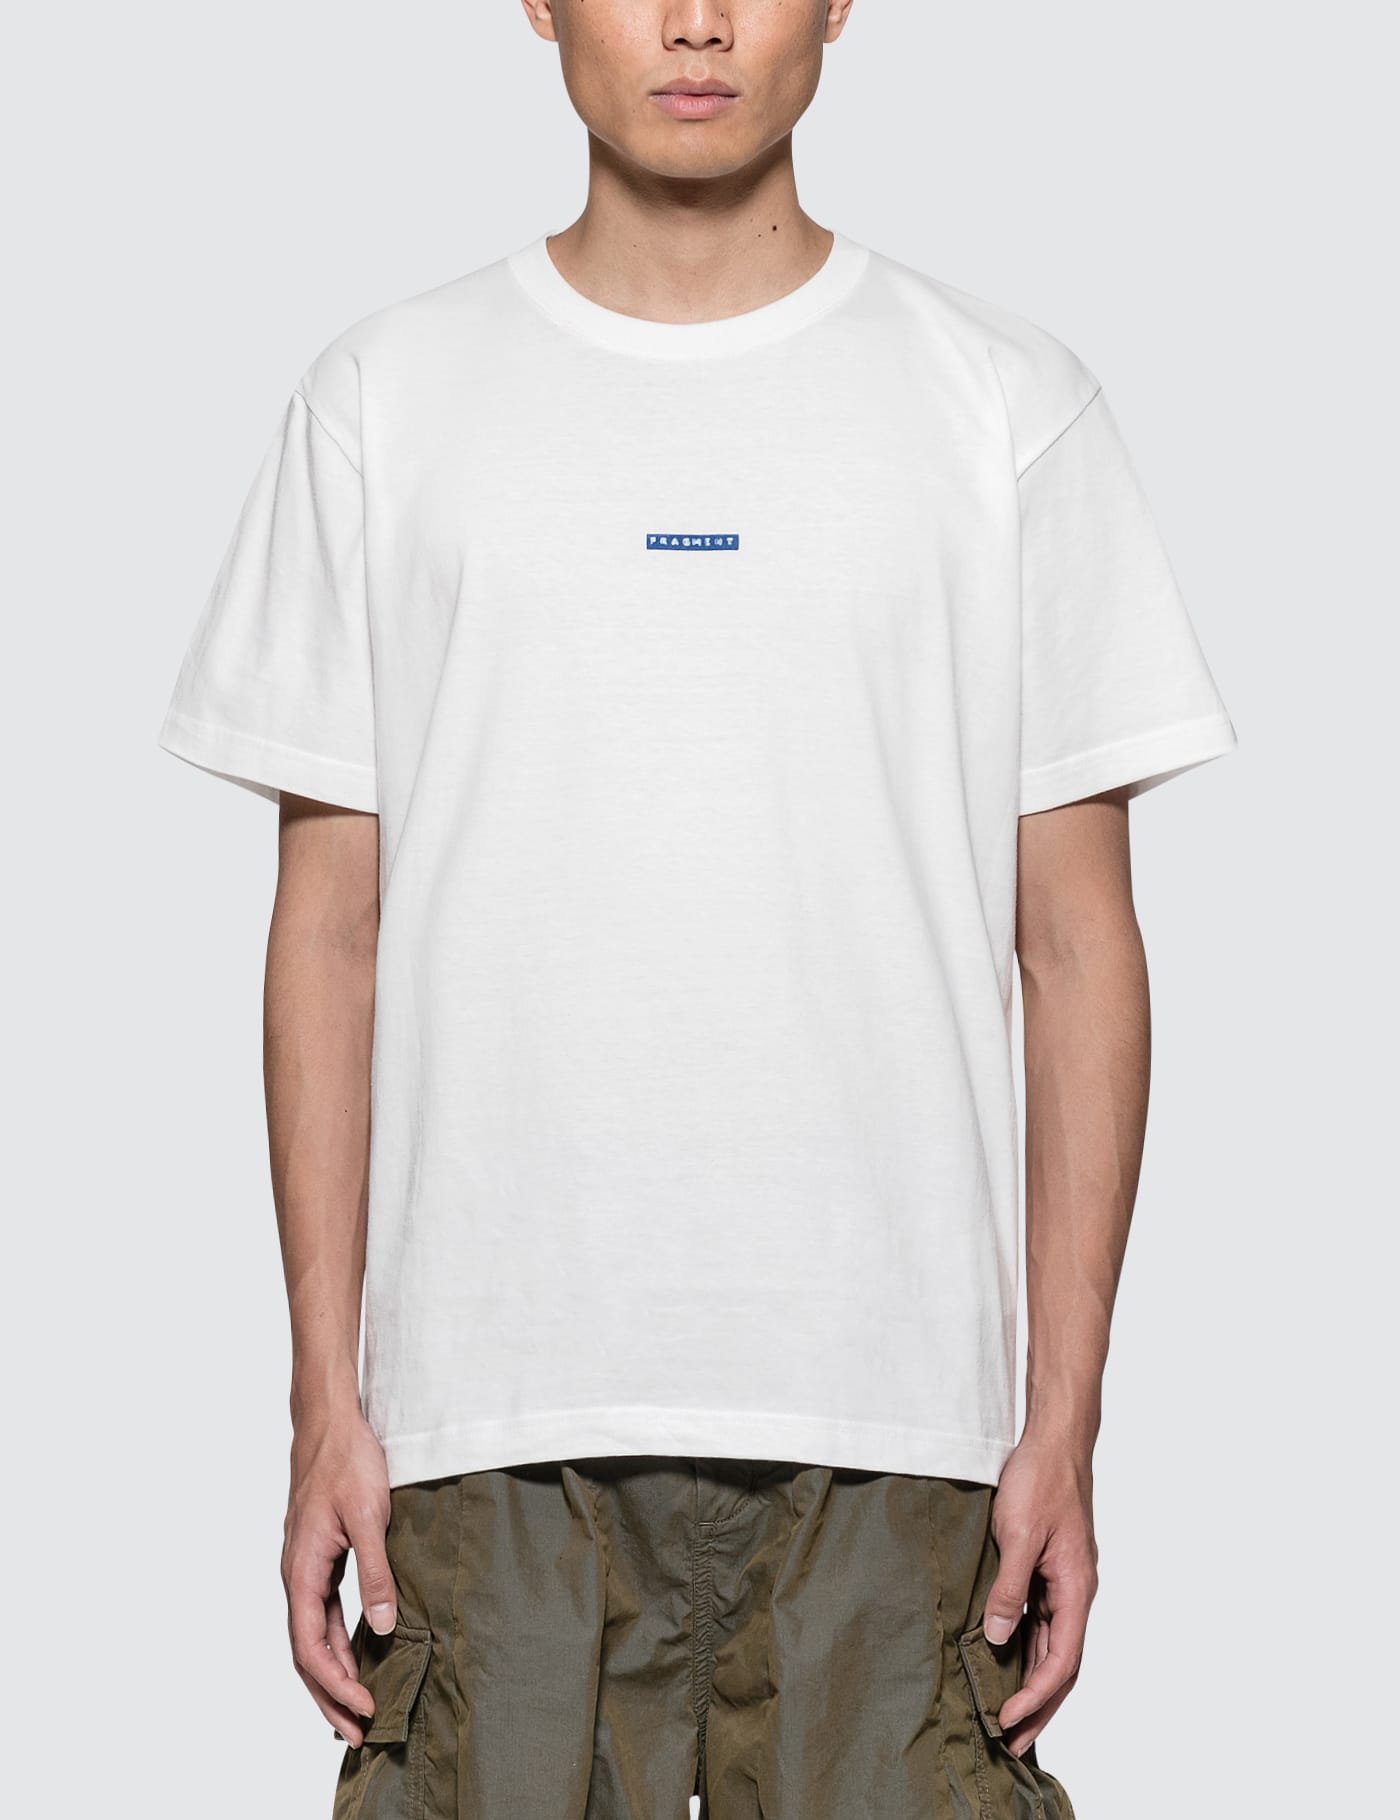 sacai x Fragment T-Shirt 3 Tシャツ フラグメント Tシャツ/カットソー(半袖/袖なし) 大阪激安